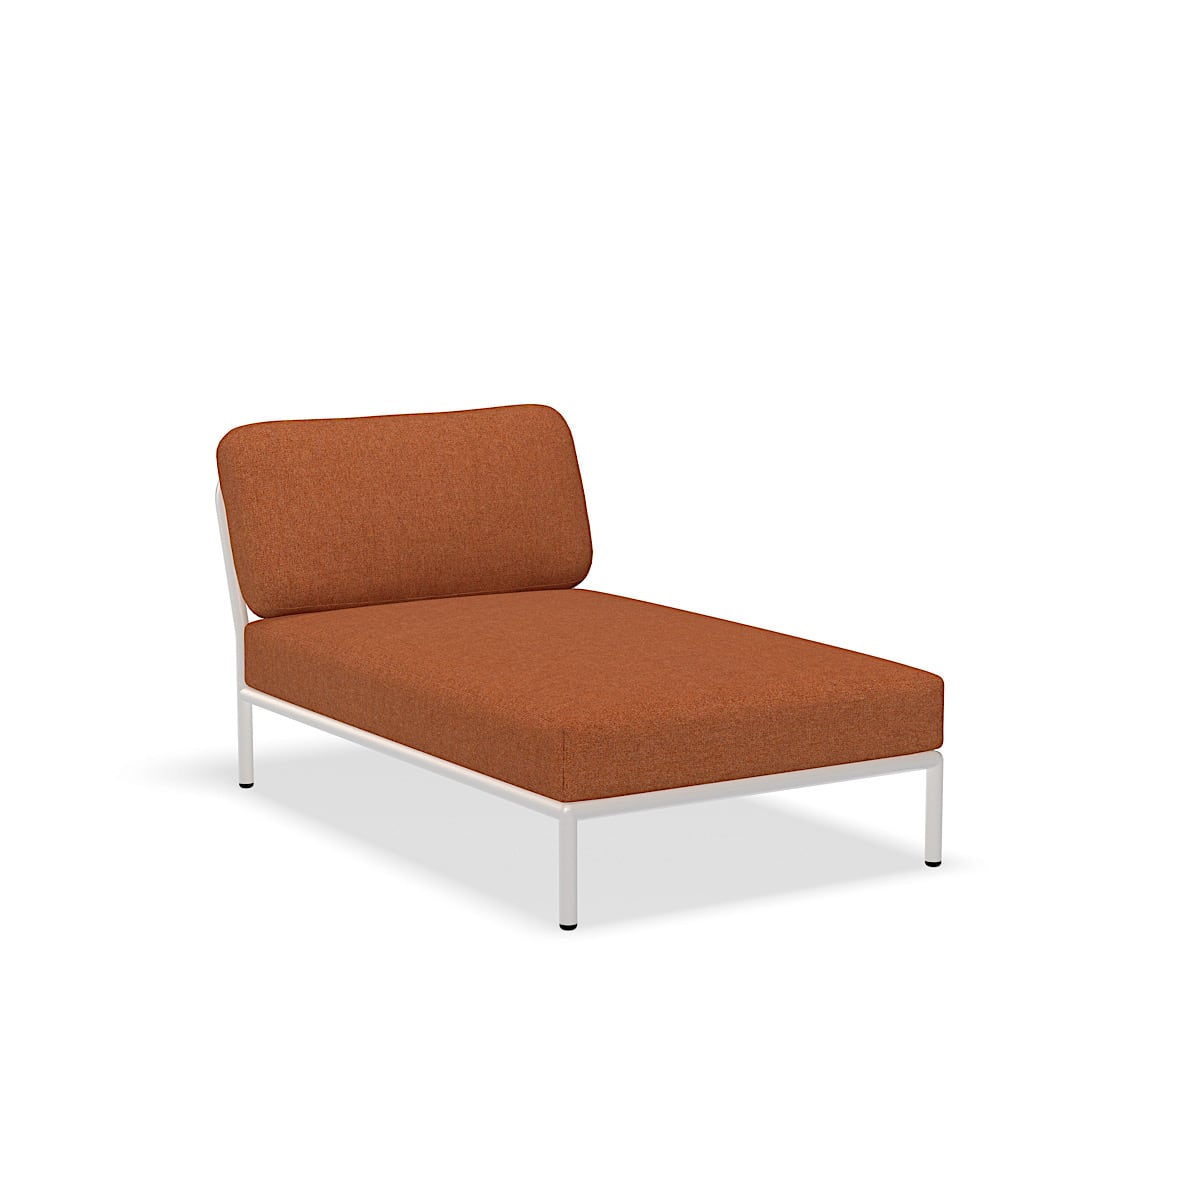 躺椅：139 x 81 x 68.5 釐米（長 x 寬 x 高） - 12209-1743 - 躺椅， Rust （HERITAGE）， 白色結構